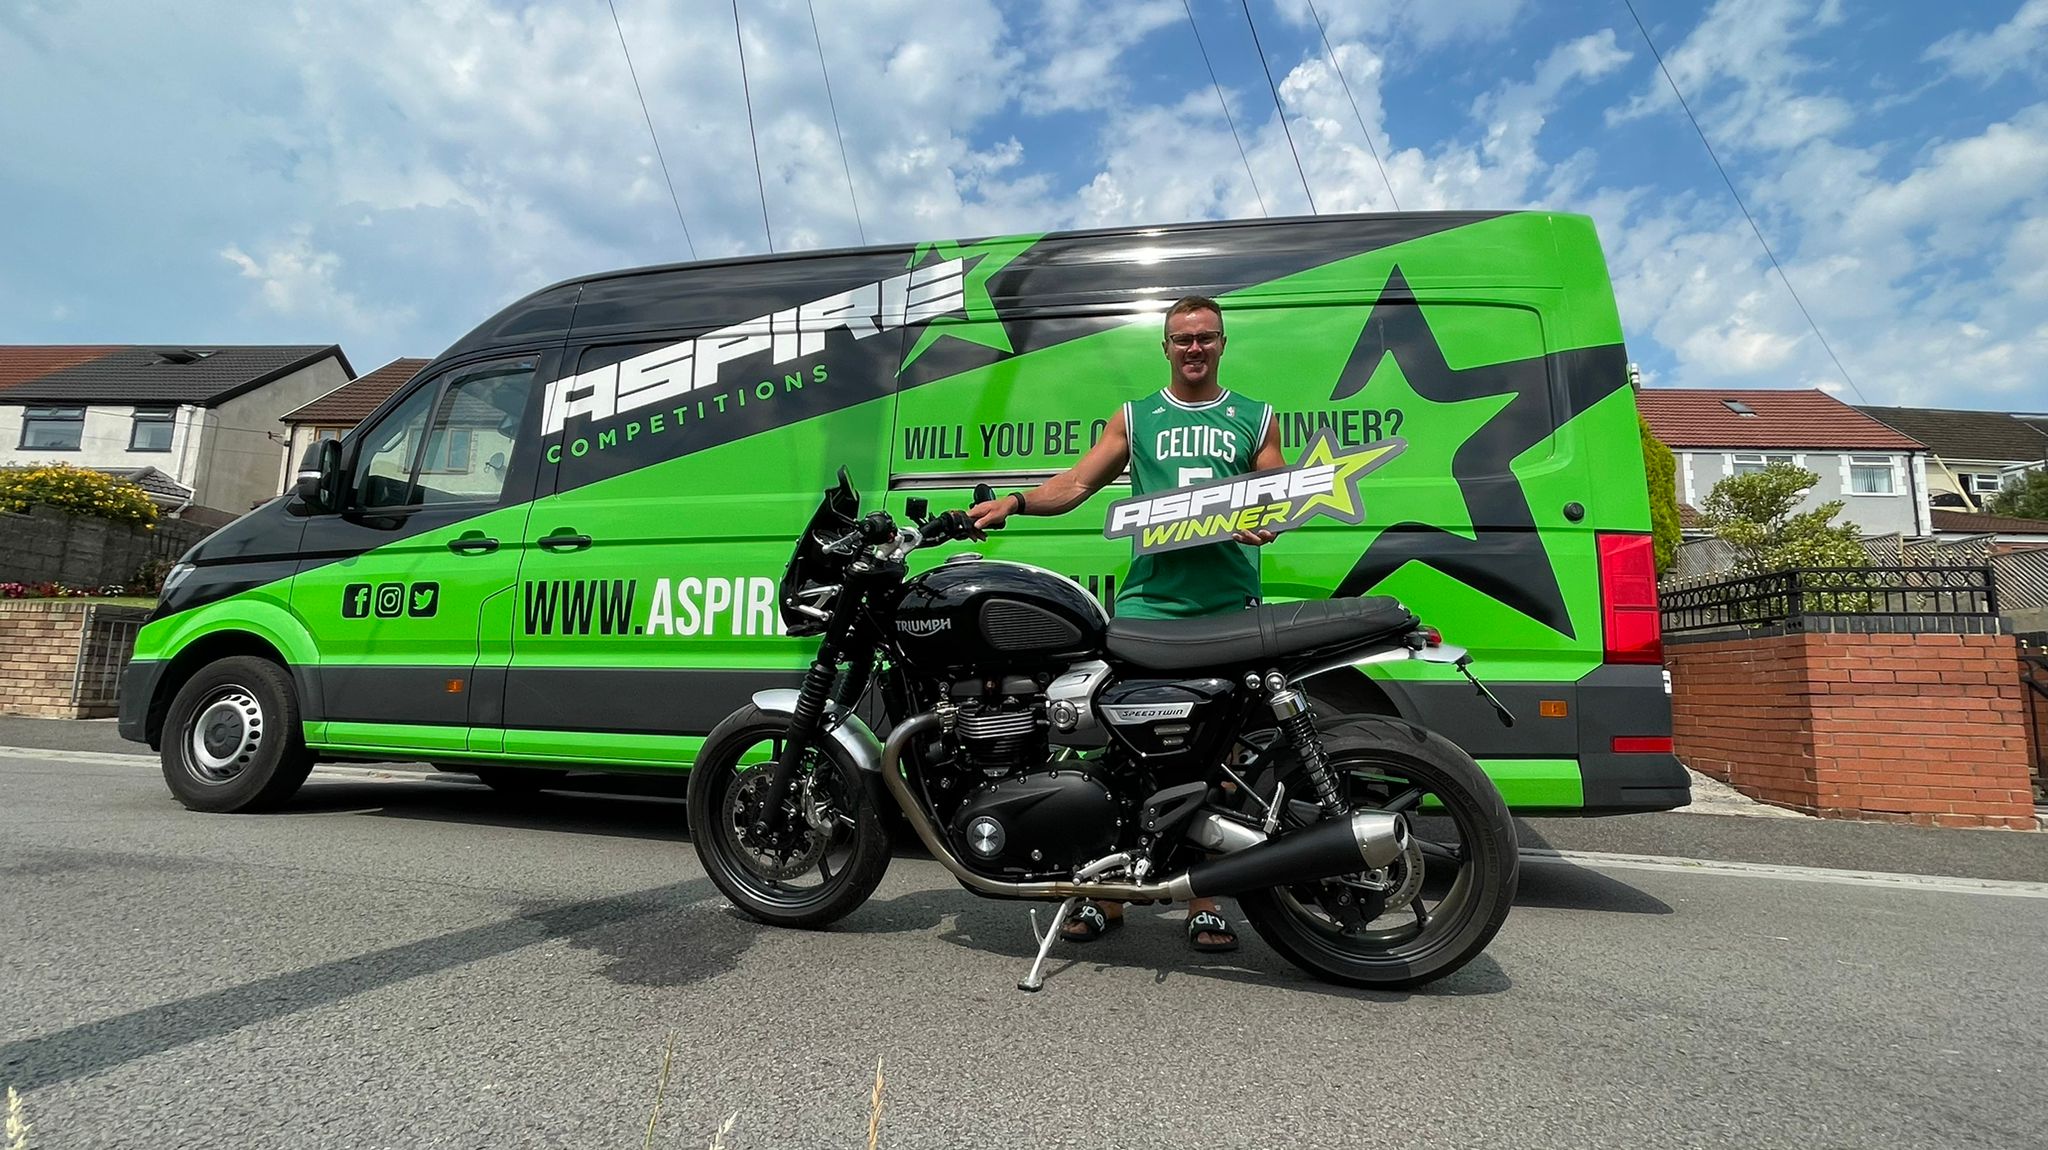 Winner Morgan Seymour of a 2019 – Triumph Speed Twin 1200 - 6th July